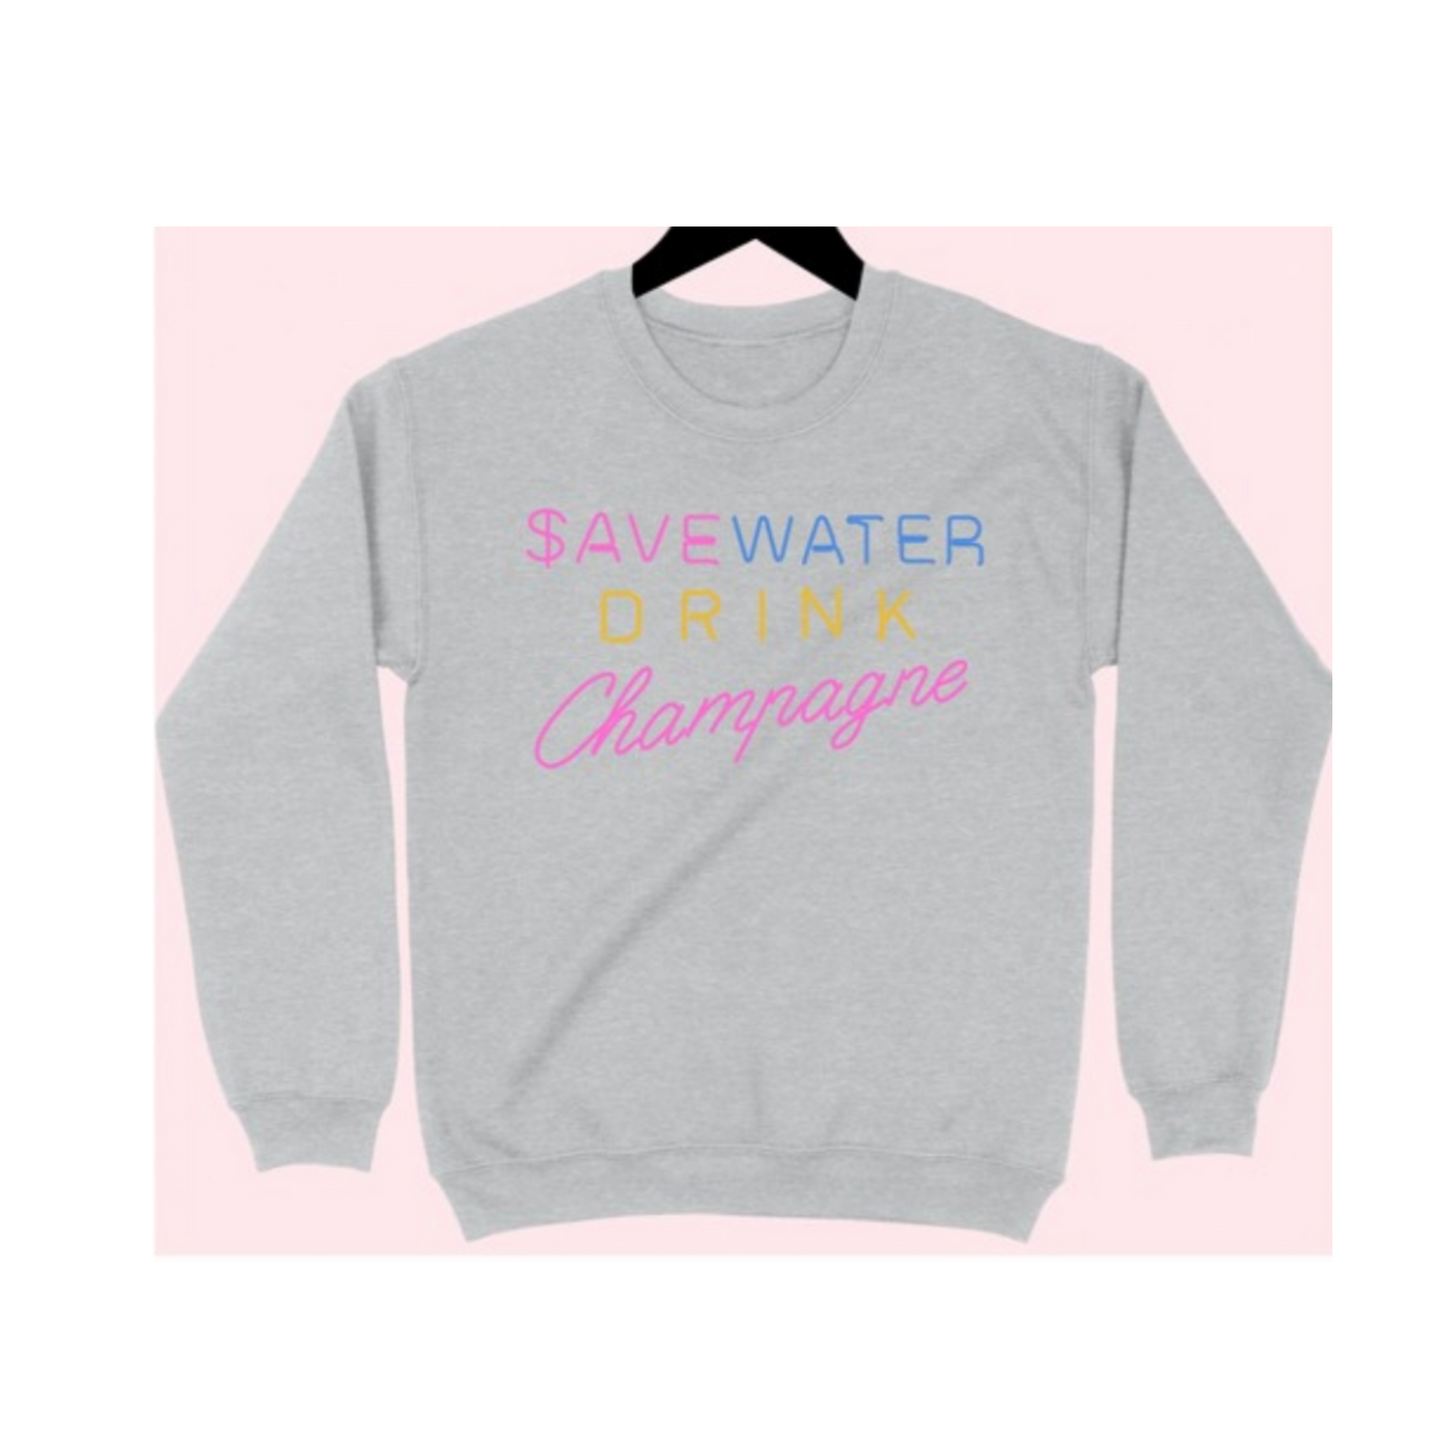 Save Water Sweatshirt (Sizes Small - 3X)